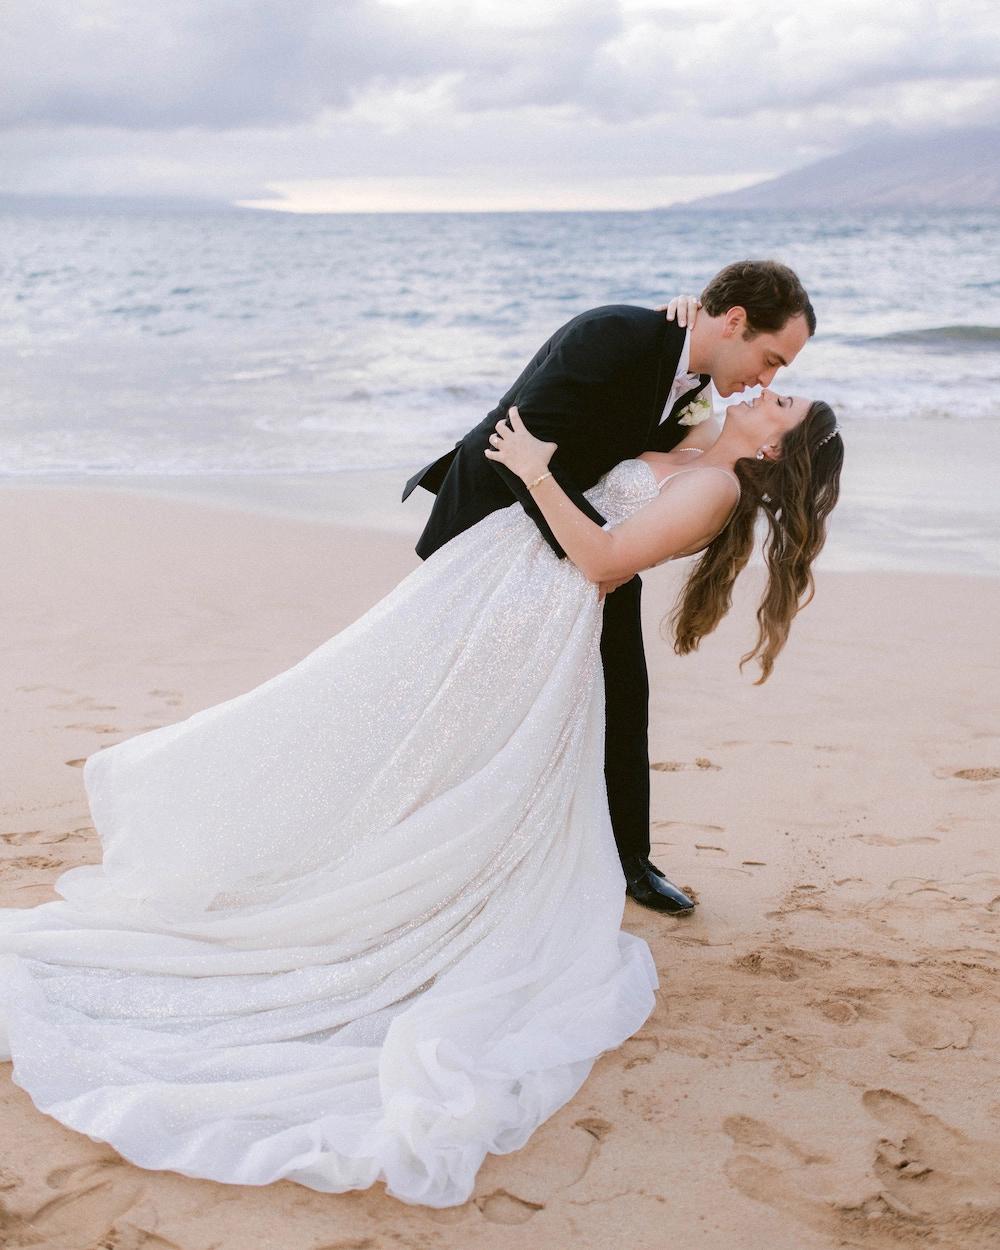 Hannah Wears Glittery Wedding Dress for Maui Wedding Image